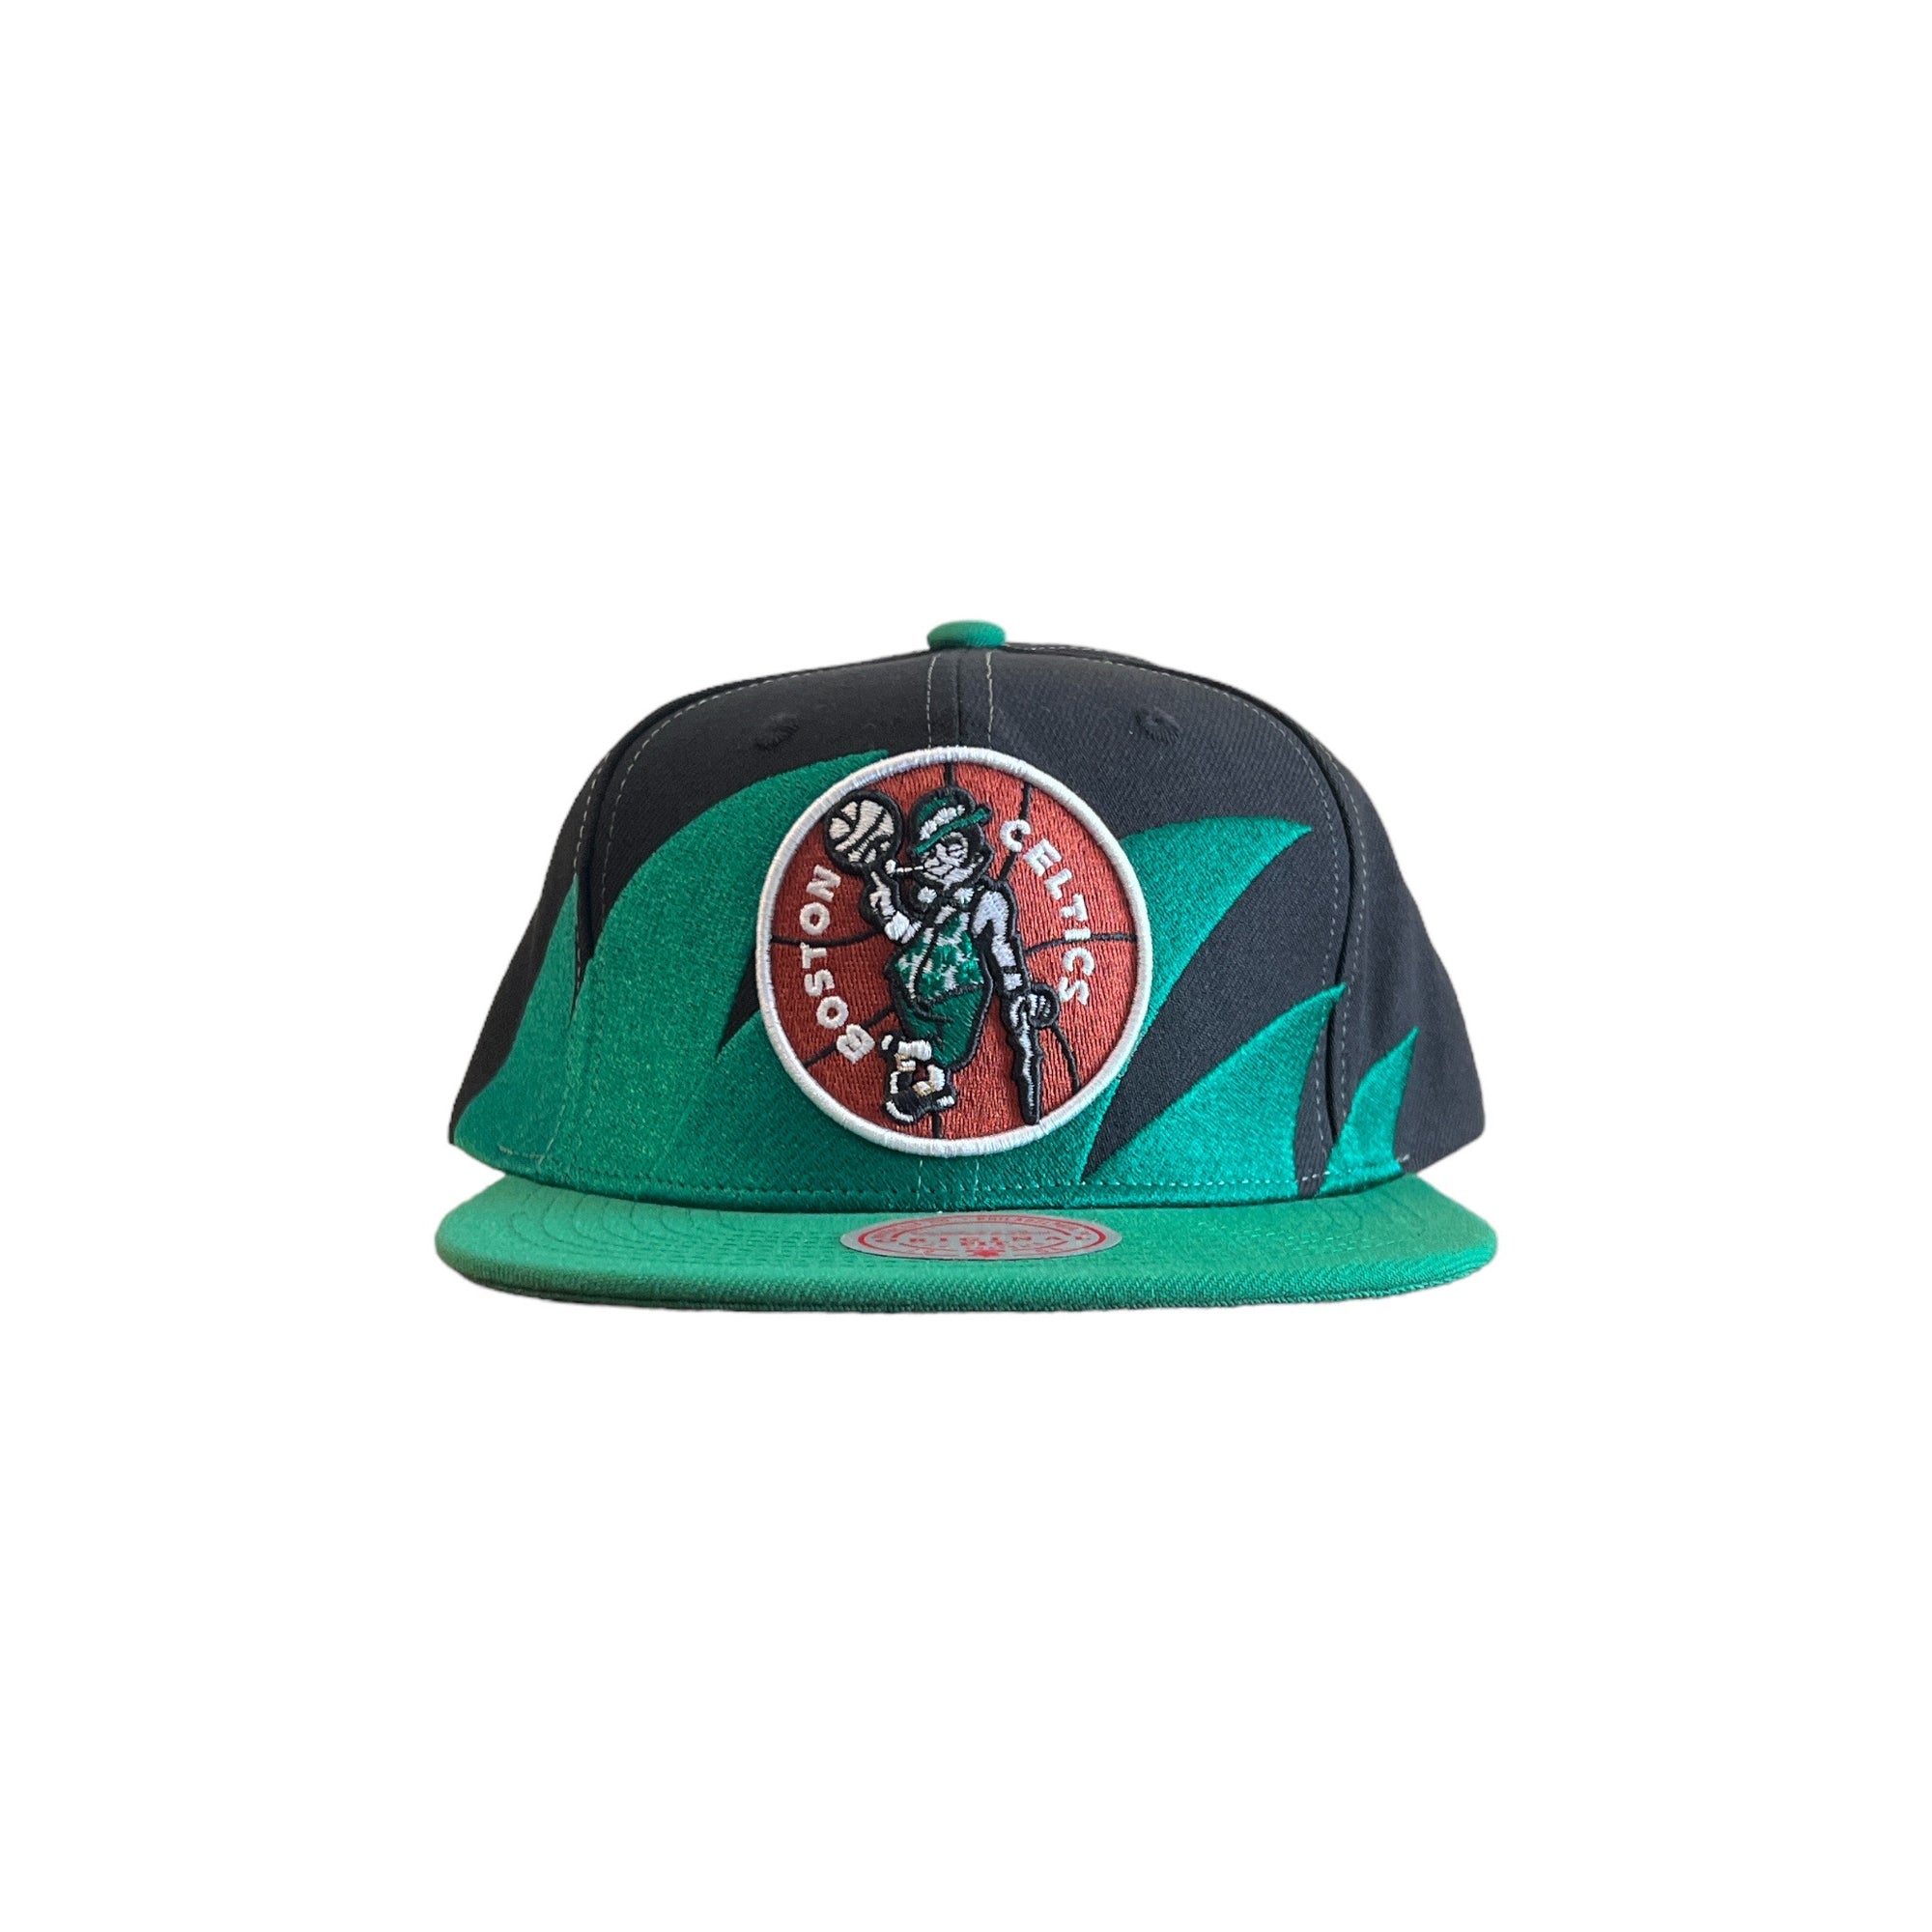 Boston Celtics Mitchell & Ness Snapback Hat